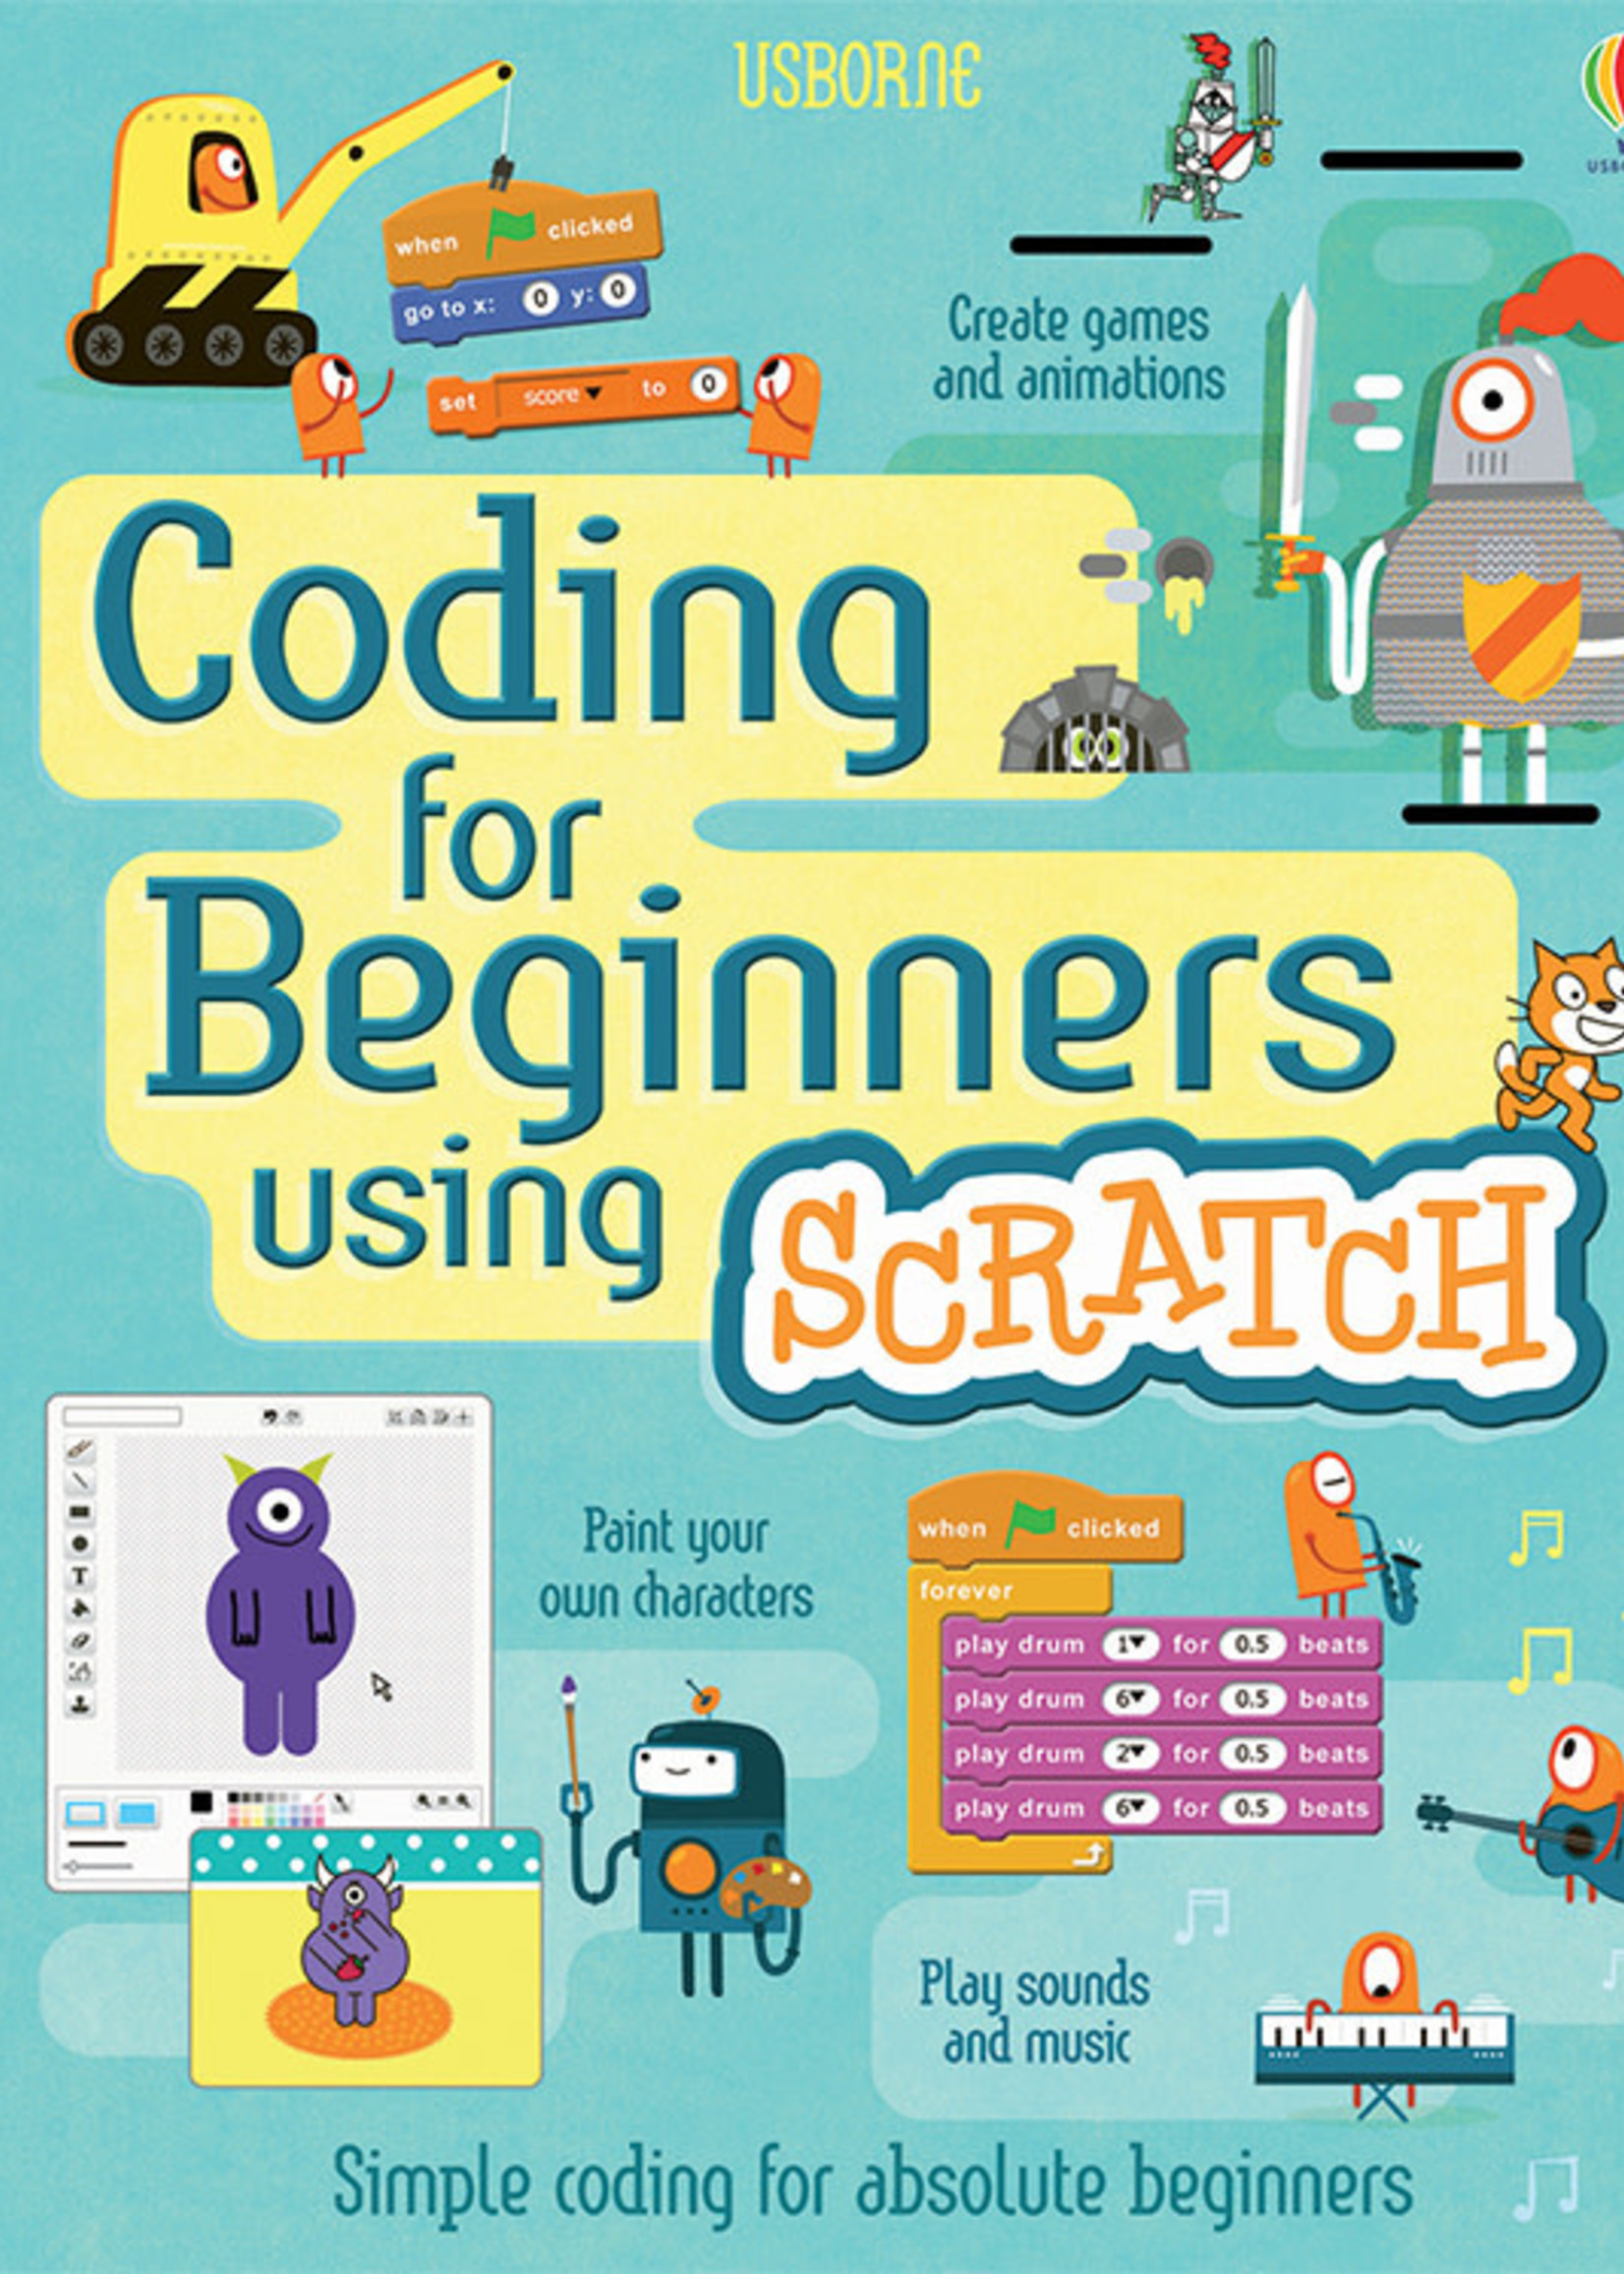 Usborne Coding for Beginners Using Scratch IR